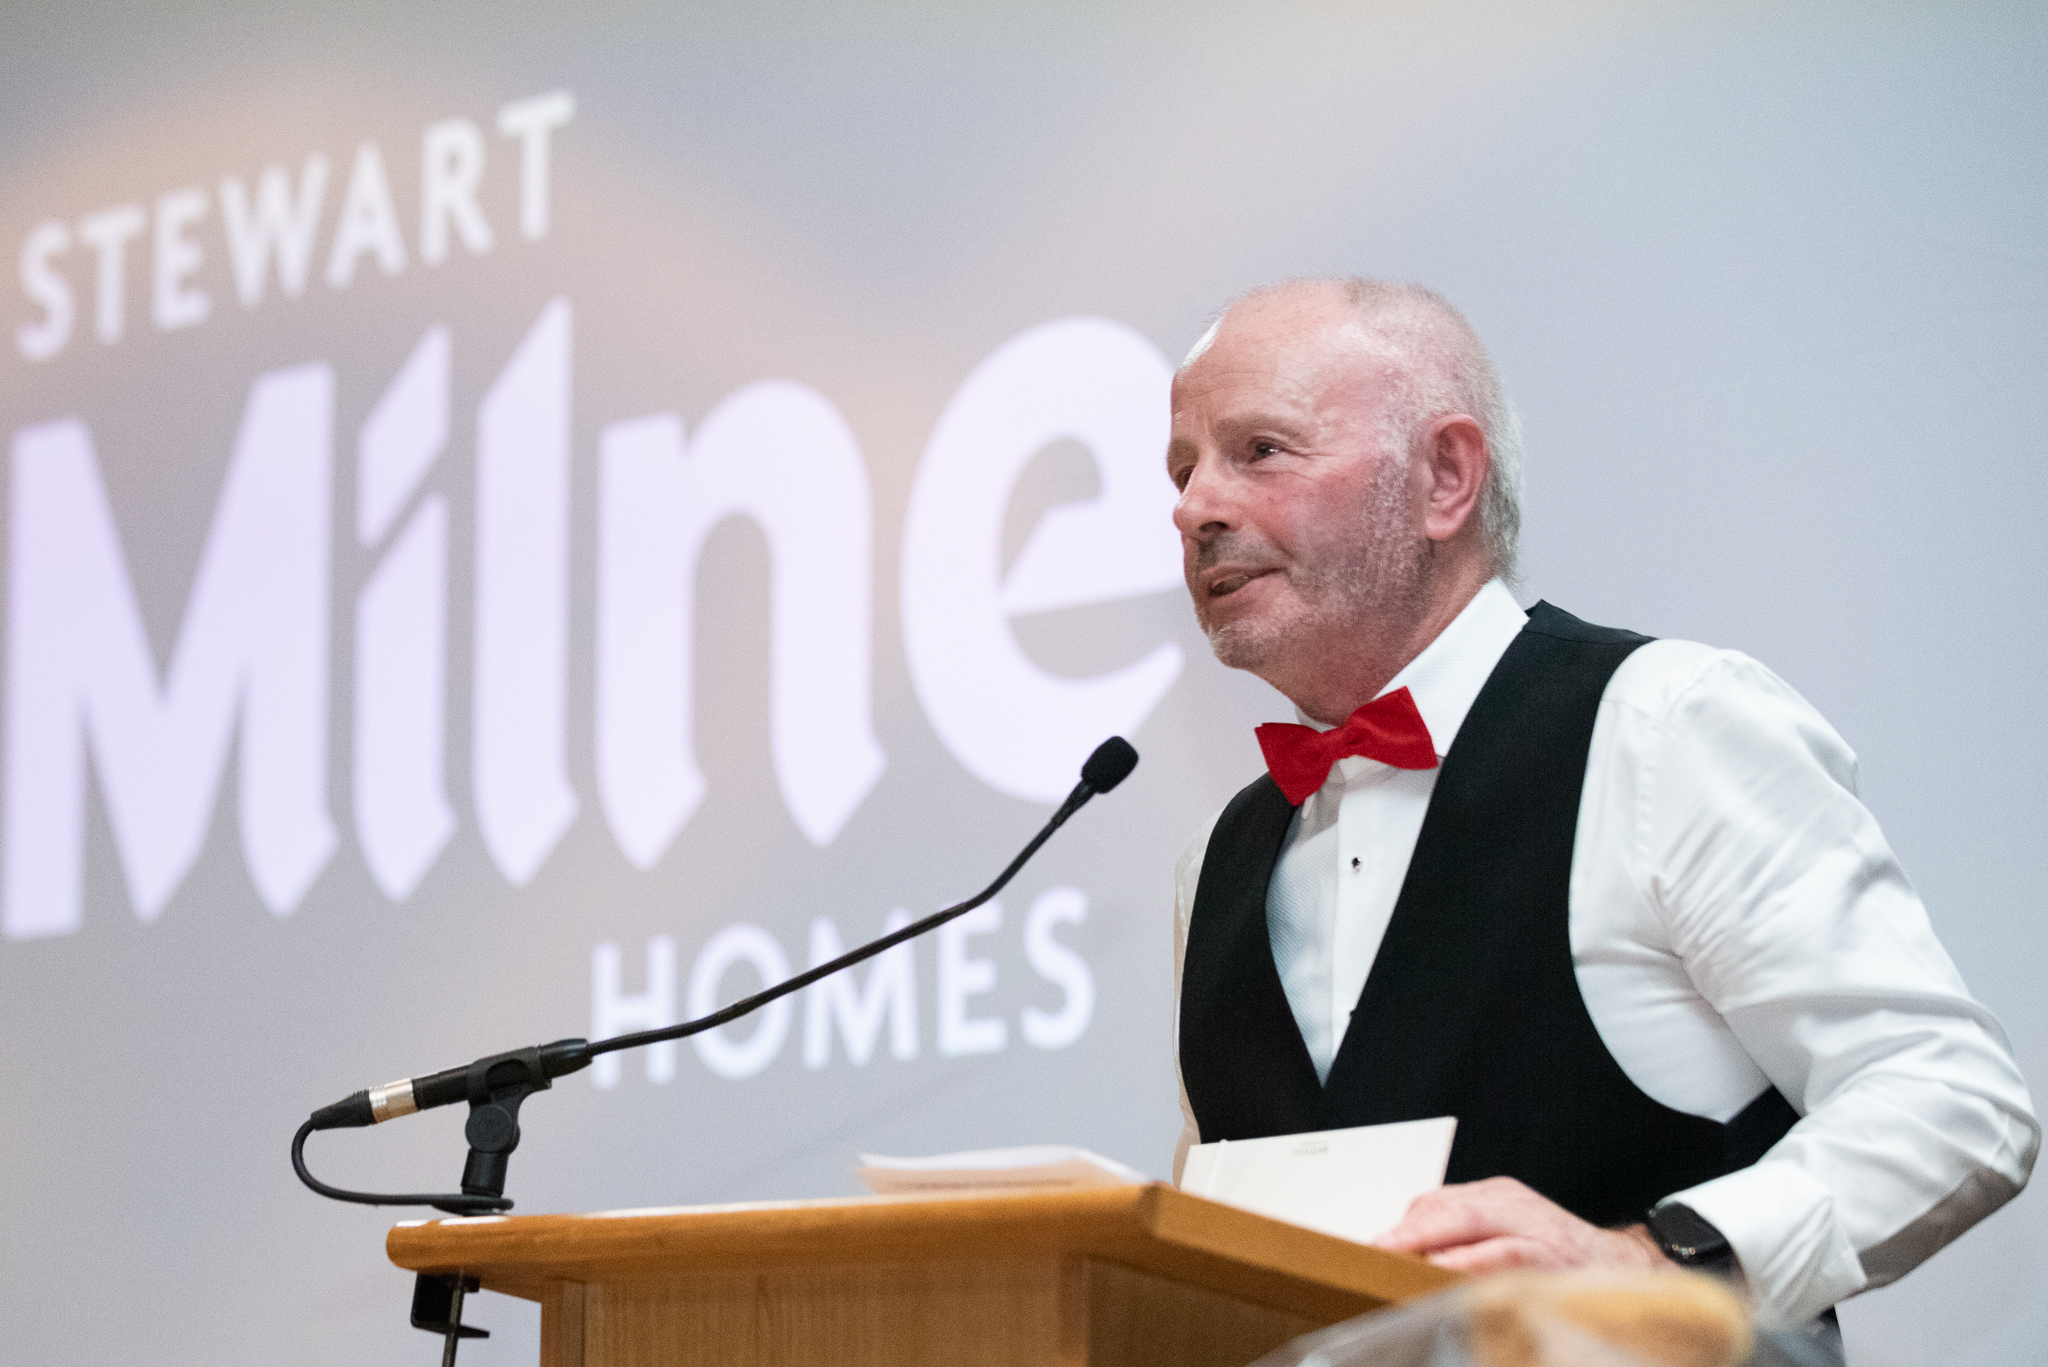 Stewart Milne Homes Charity Ball raises £40,000 for charity